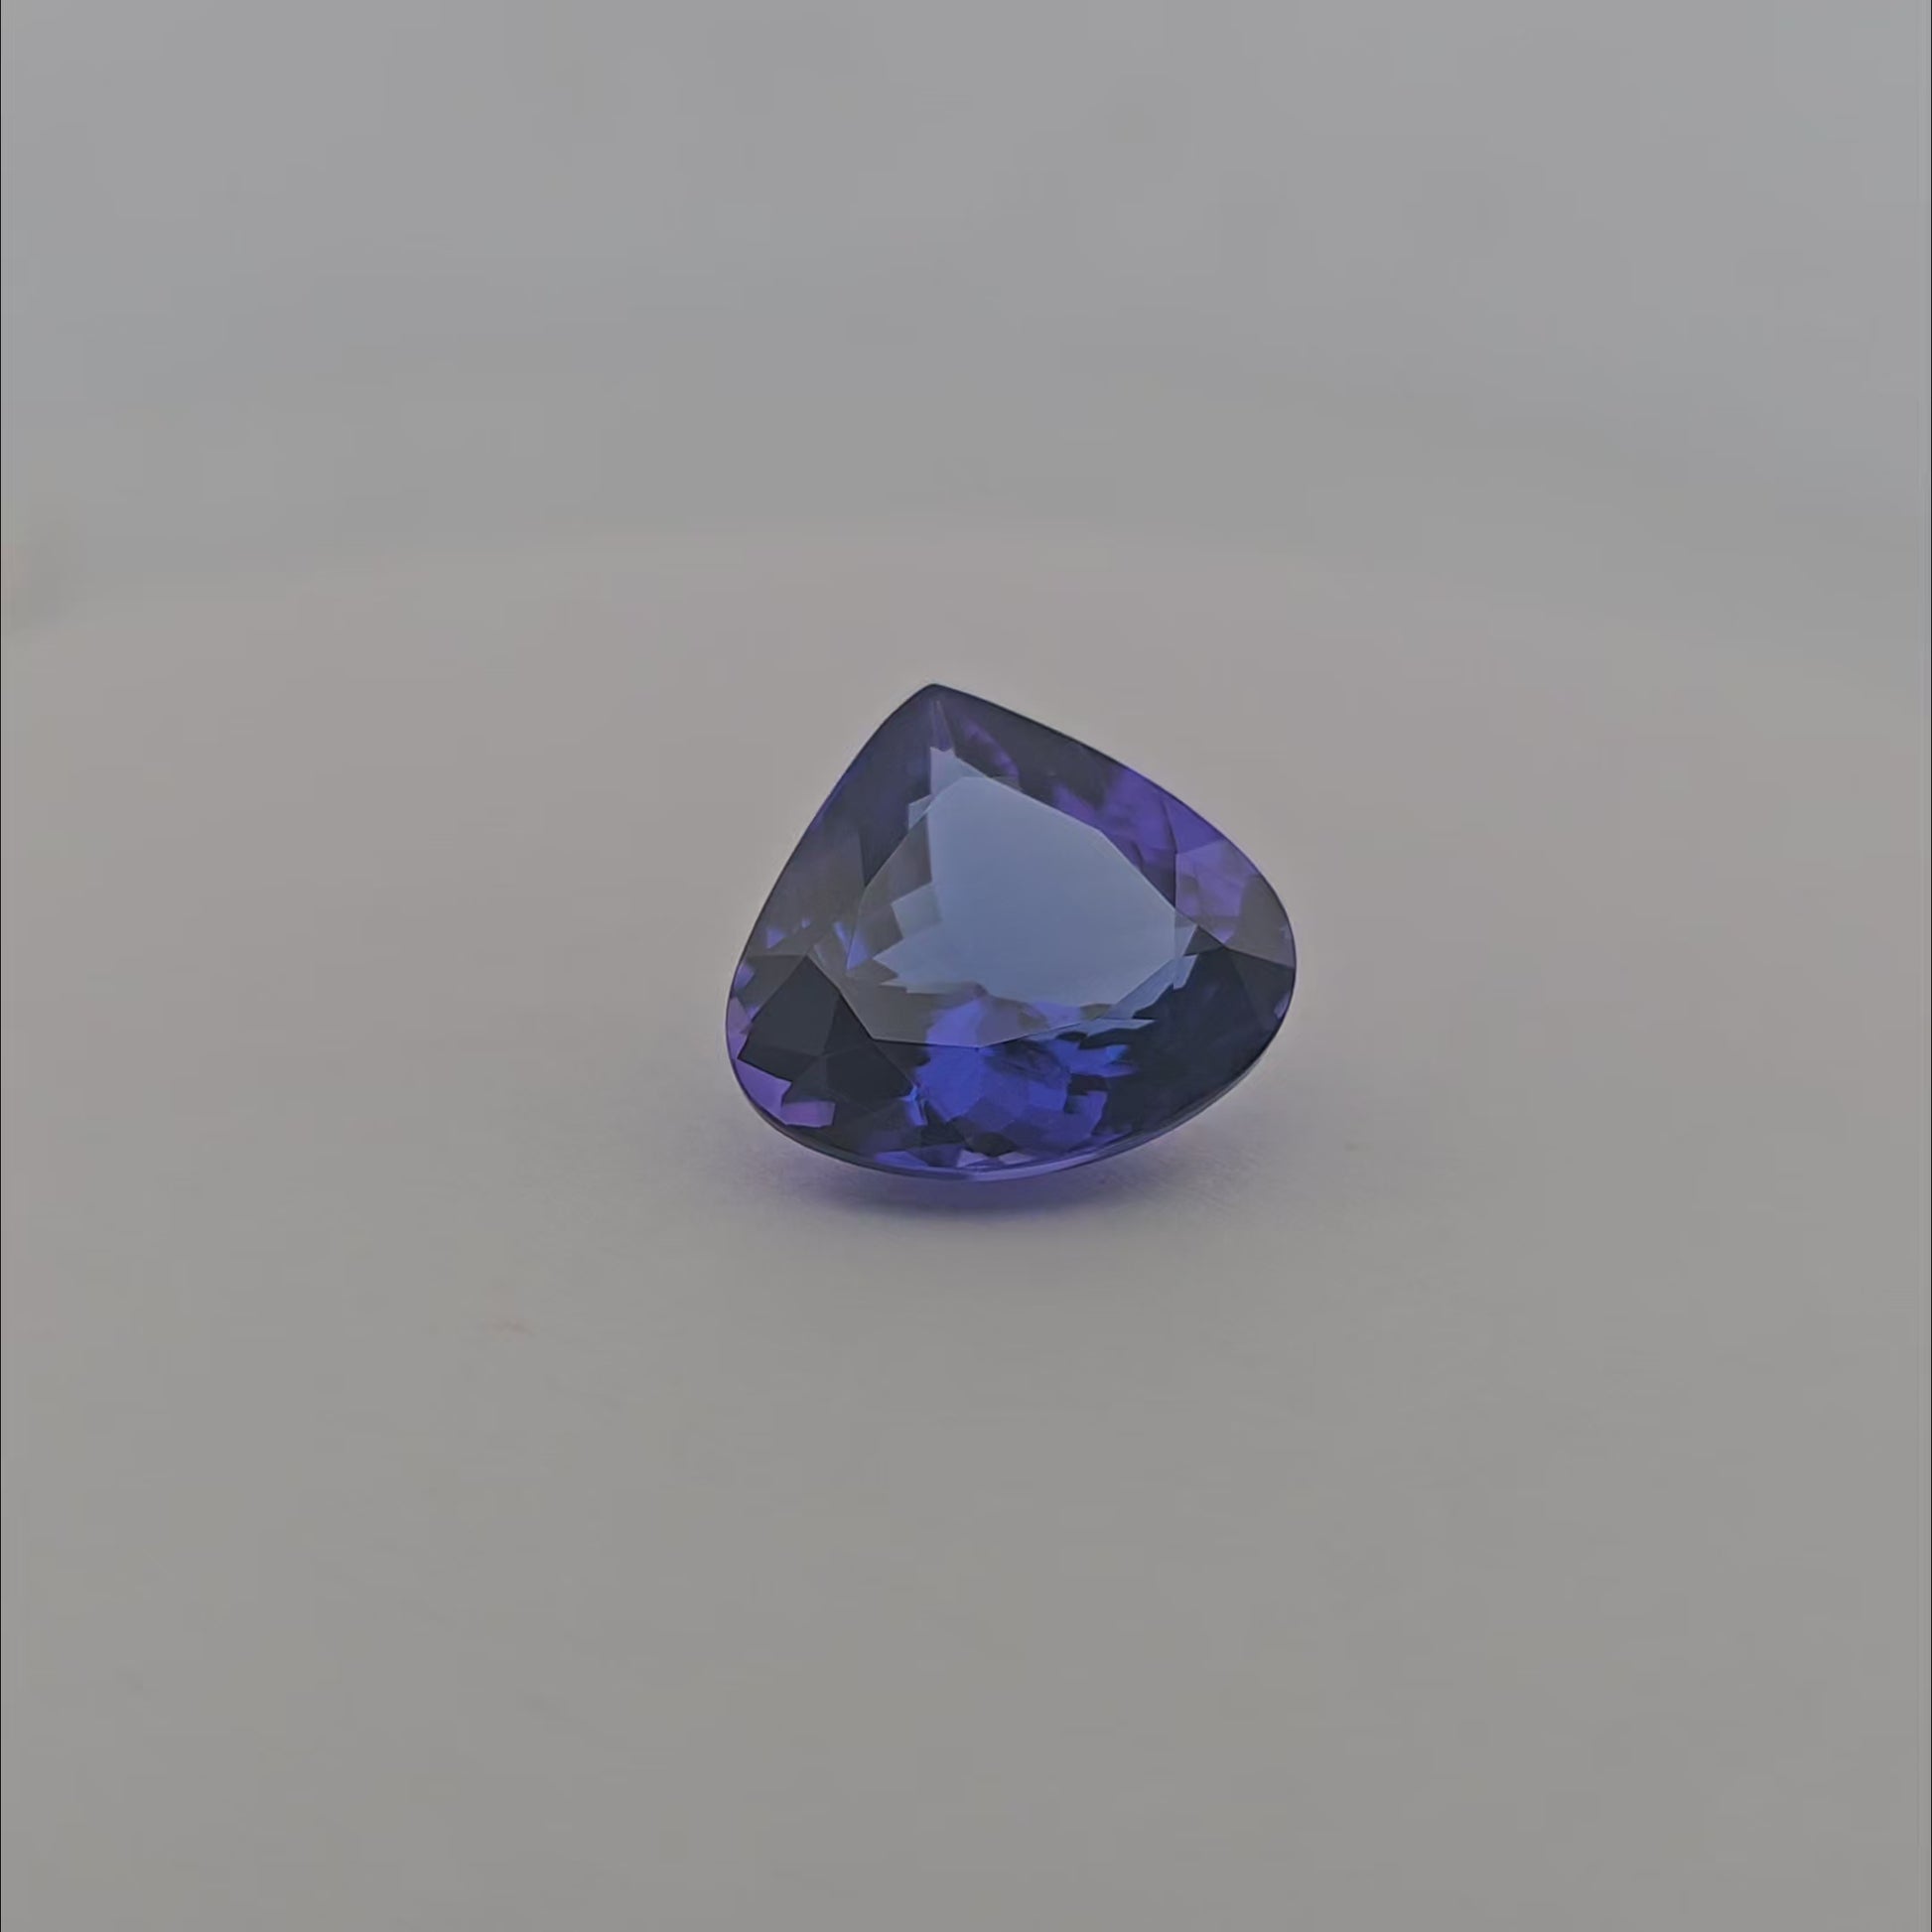 loose Natural Blue Tanzanite Stone 8.7 Carats Heart Cut (13.5 x 14.2 mm)